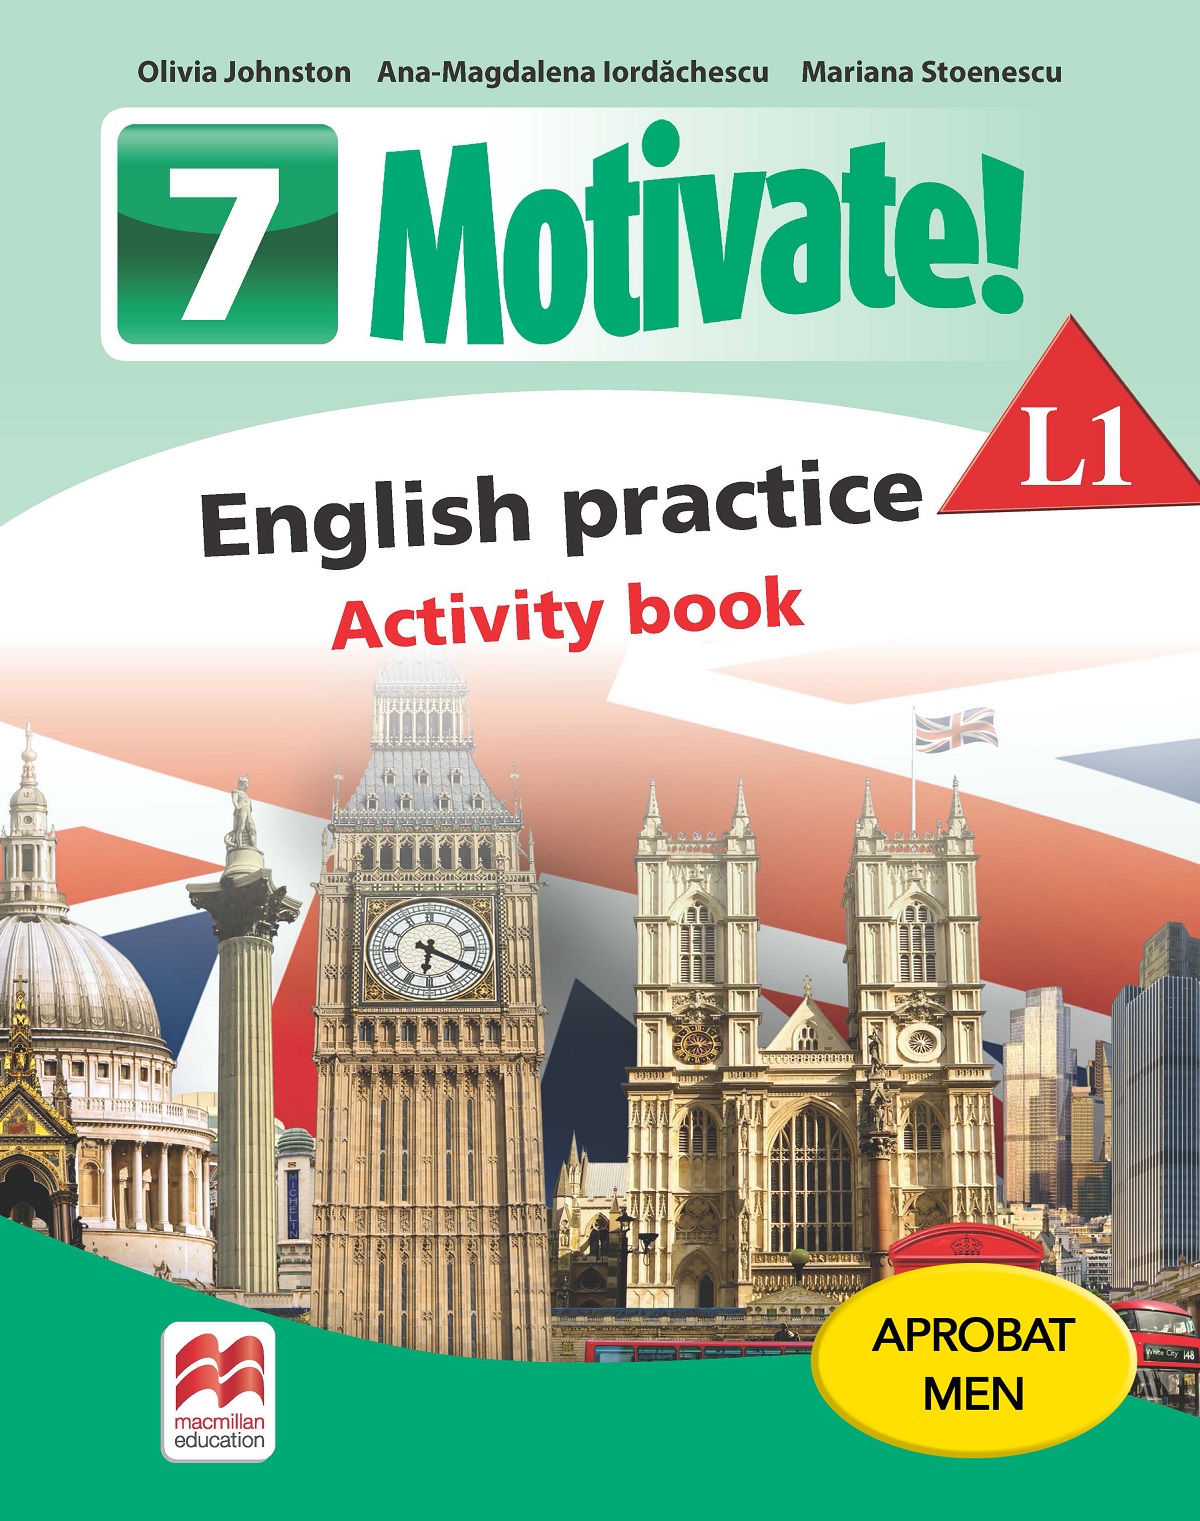 Motivate! English practice L1. Activity book. Lectia de engleza - Clasa 7 - Olivia Johnston